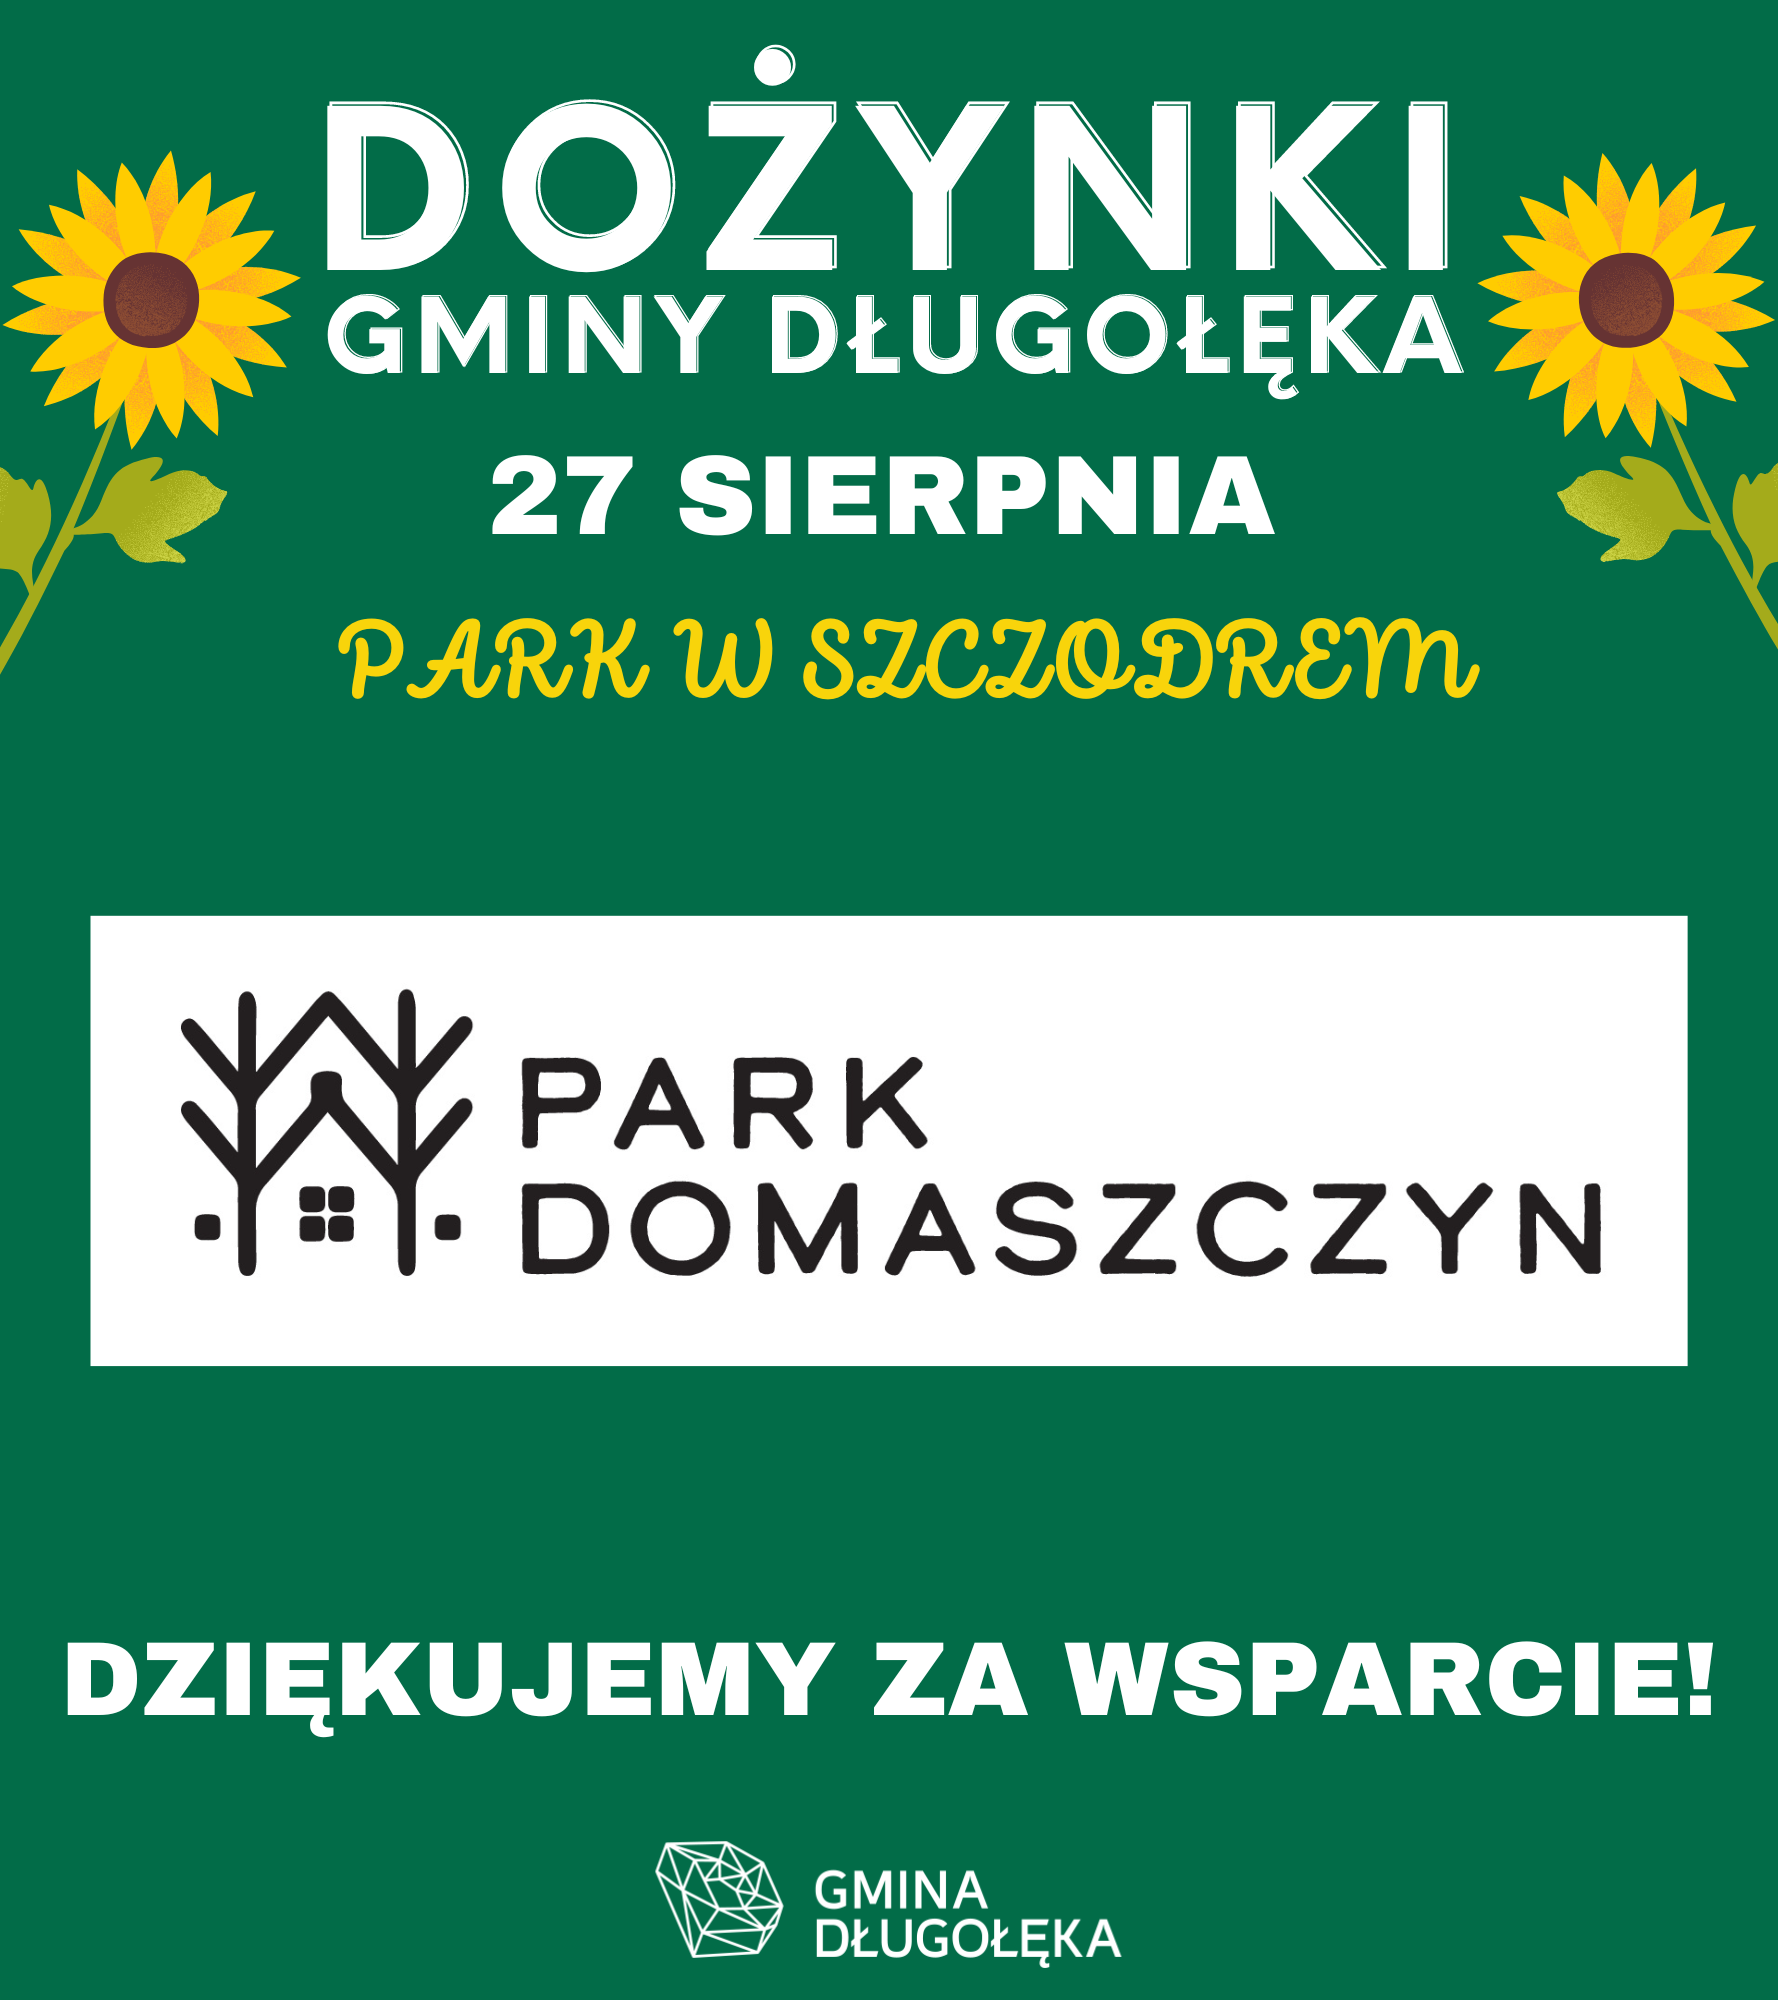 Park Domaszczyn partnerem Dożynek Gminy Długołęka